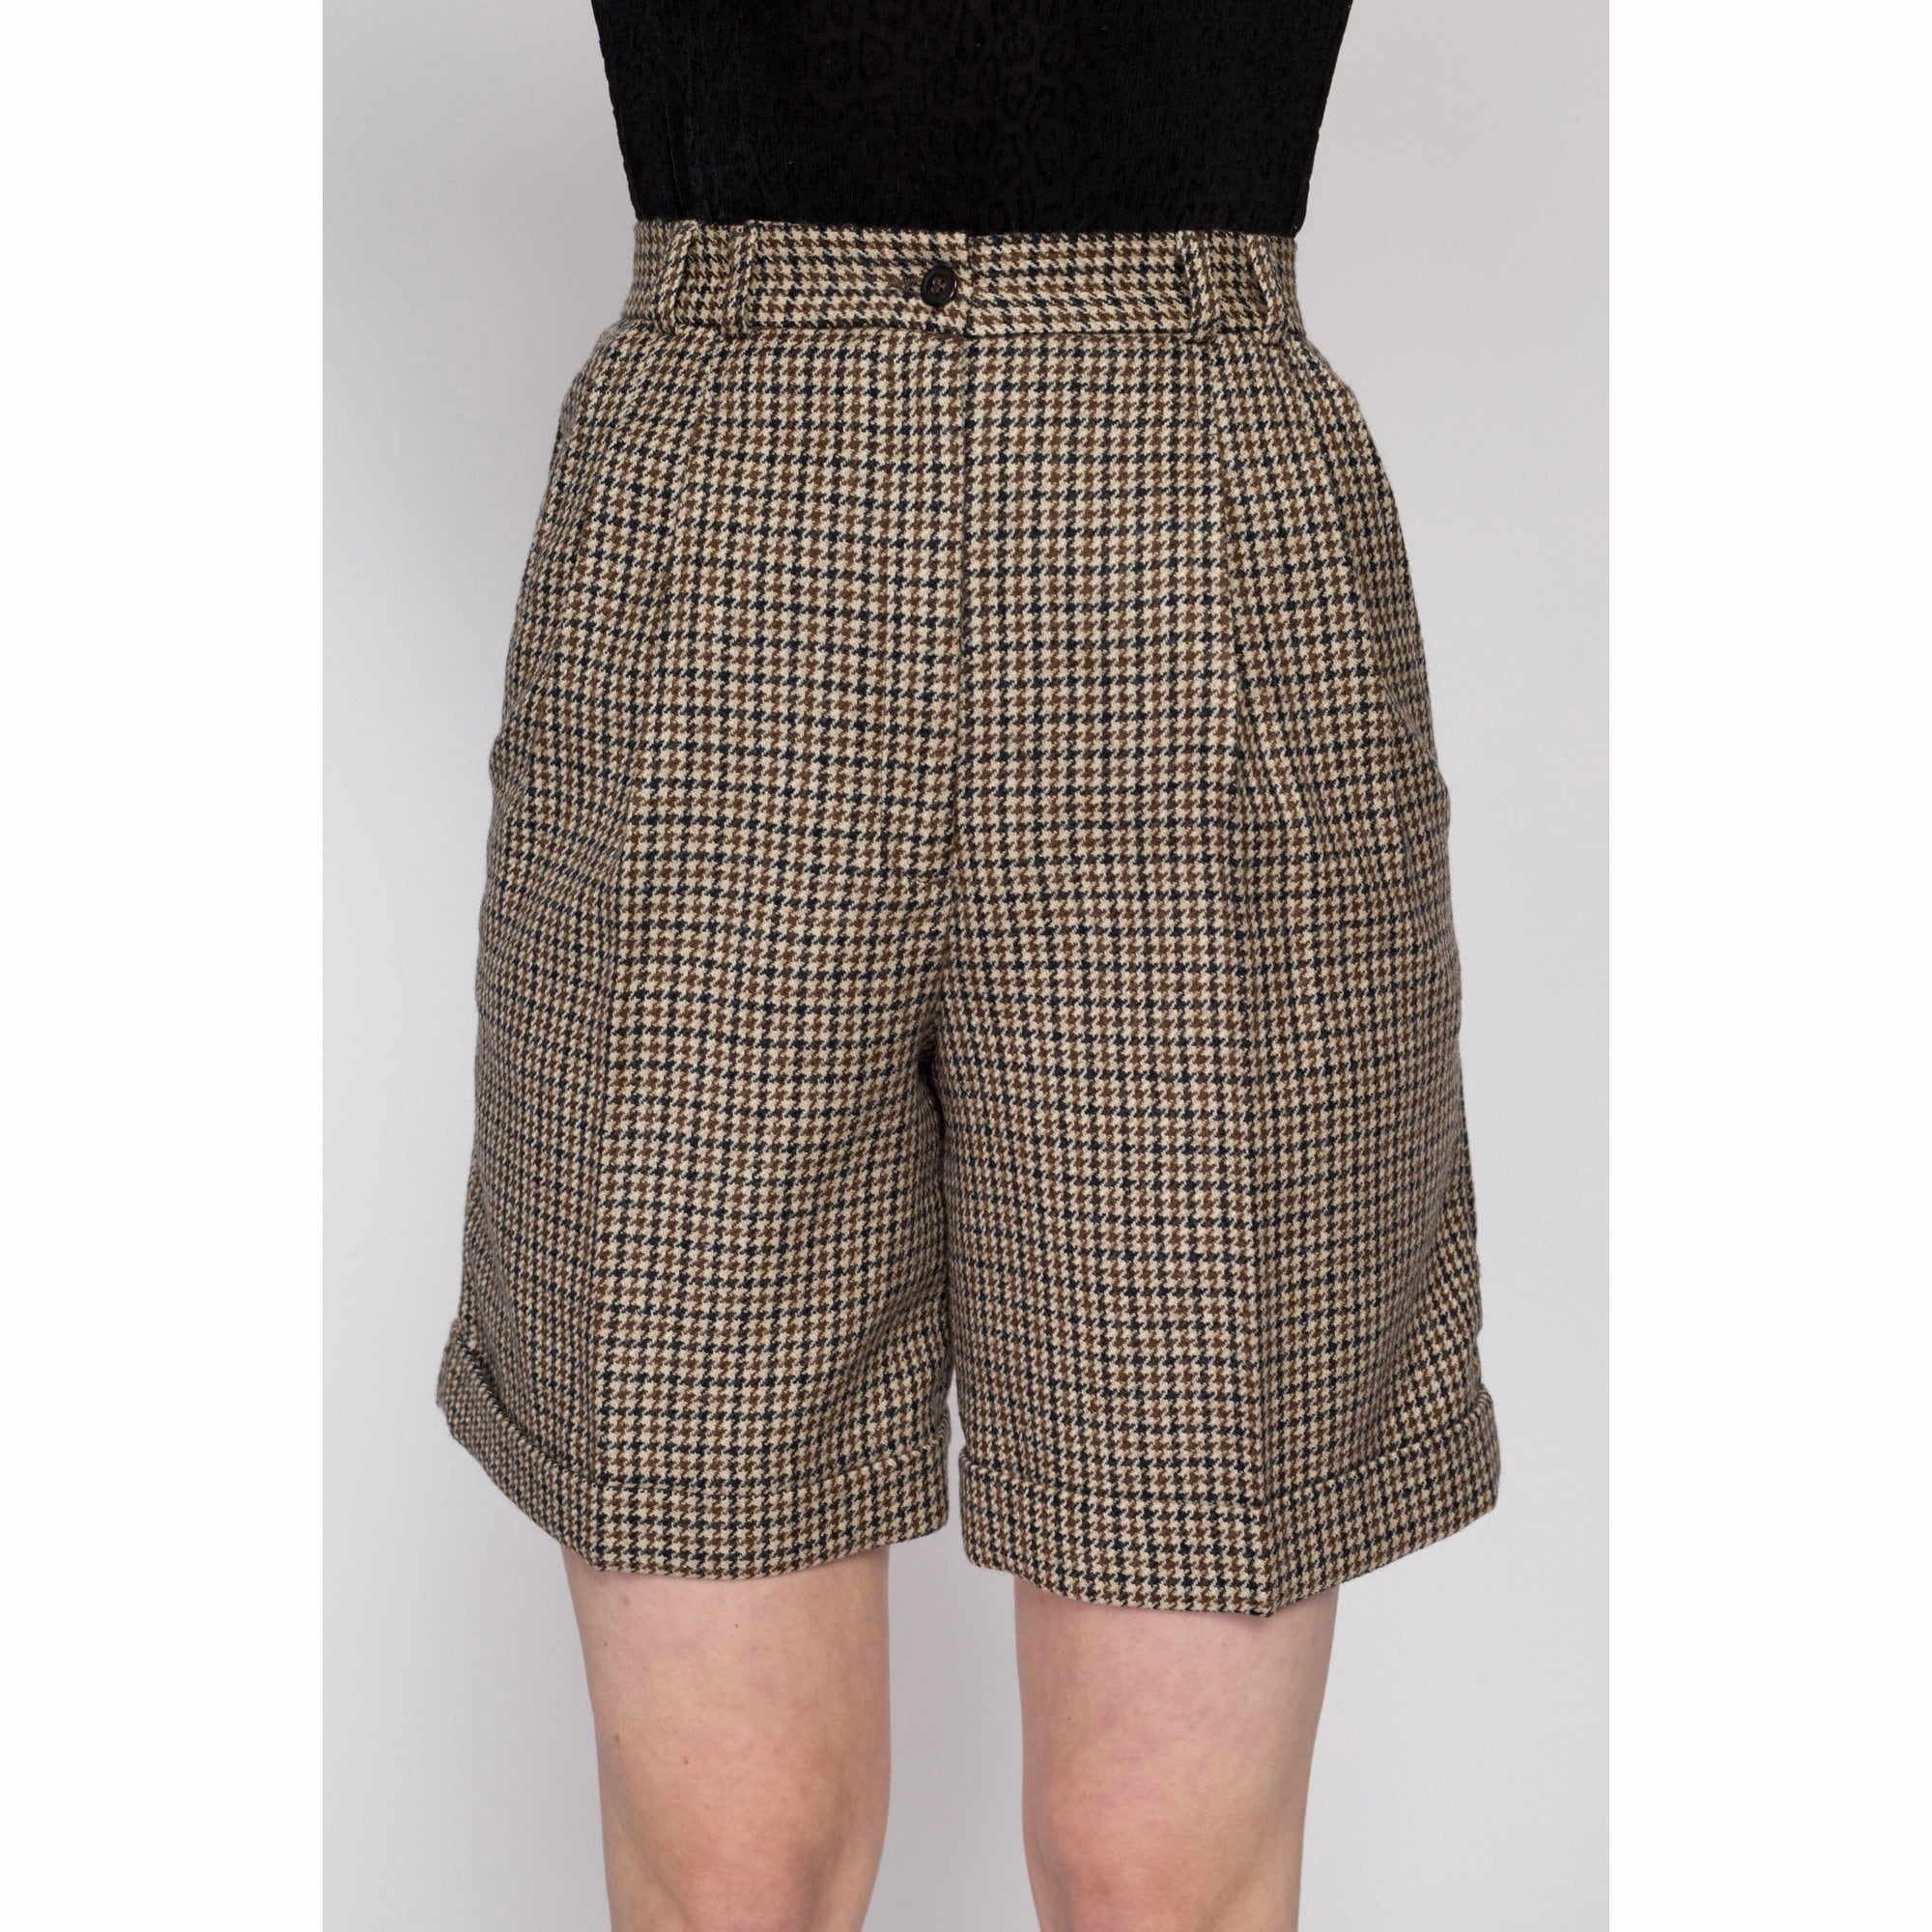 Wide Leg Shorts Women High Waist Autumn Winter Knee Length Short Trousers  Ladies (A XL) : Amazon.ca: Clothing, Shoes & Accessories